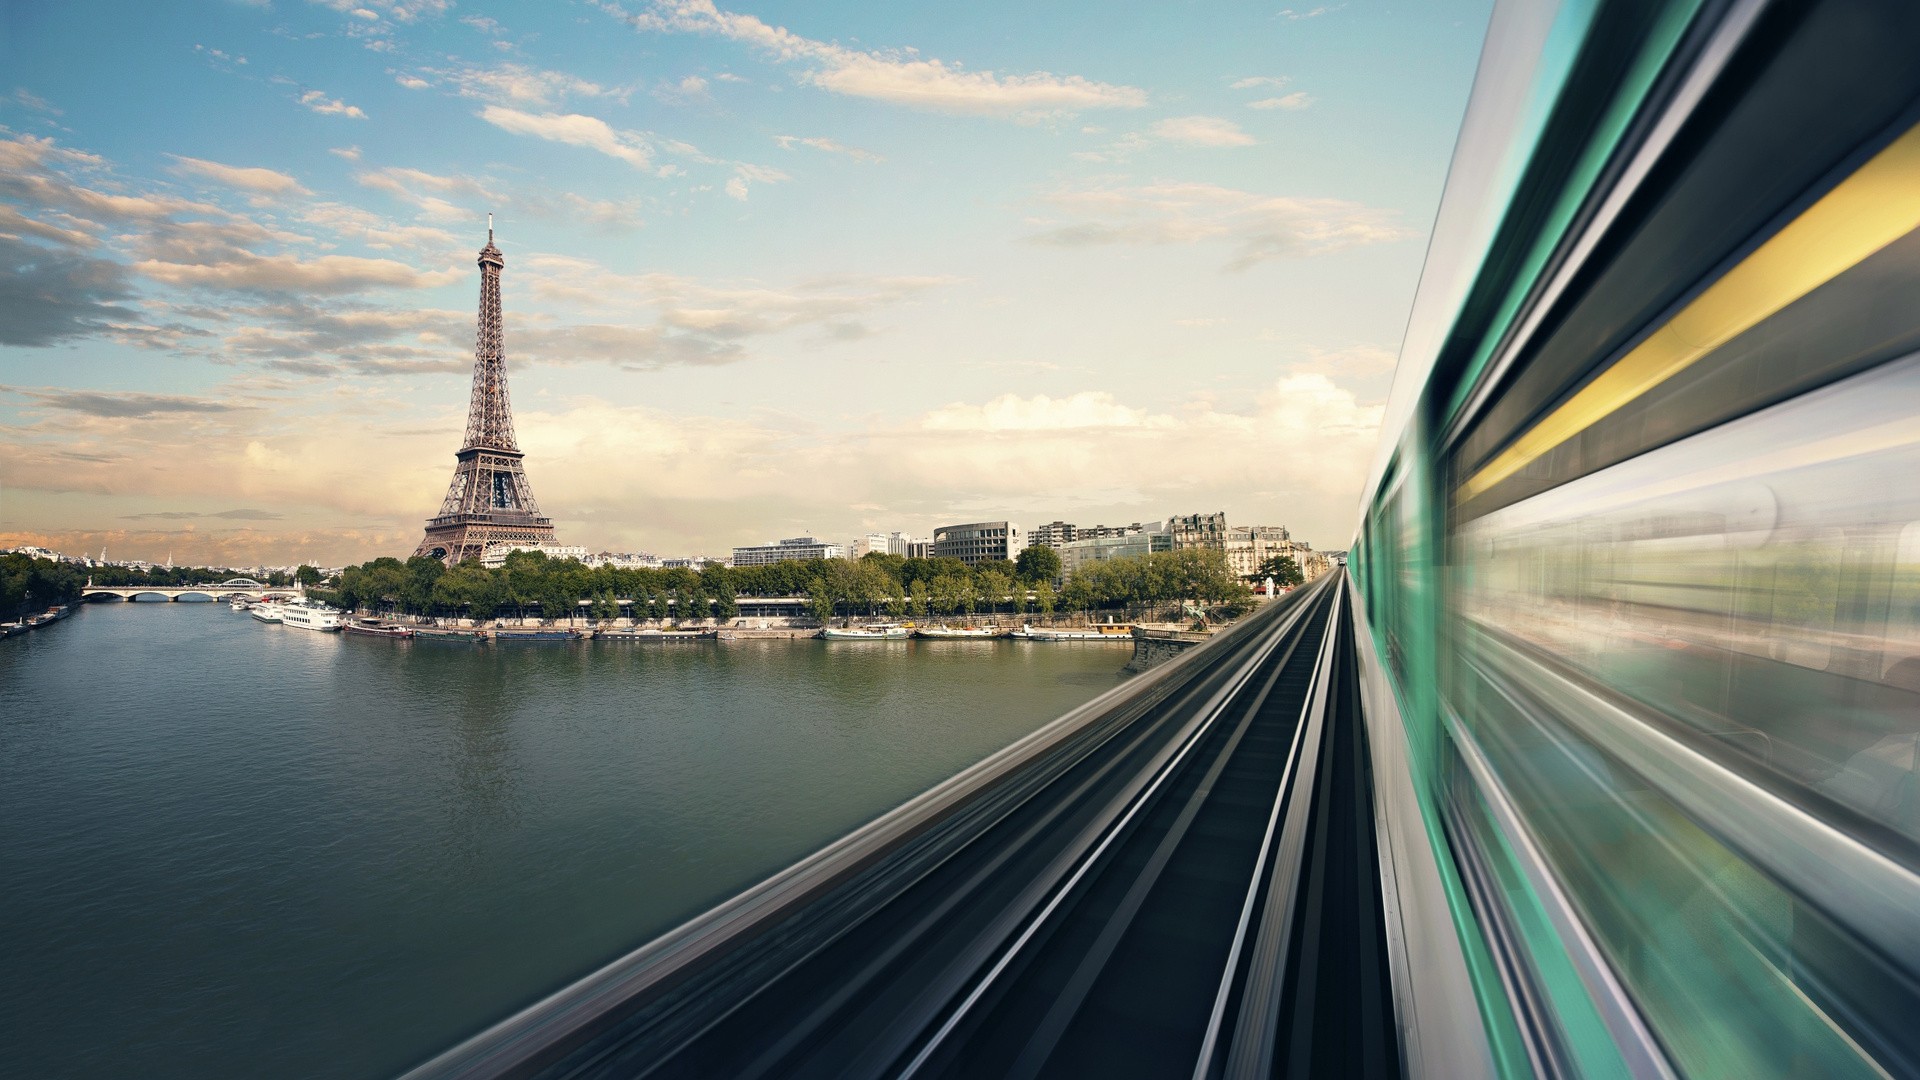 General 1920x1080 Paris France Eiffel Tower motion blur train river construction Seine  vehicle landmark